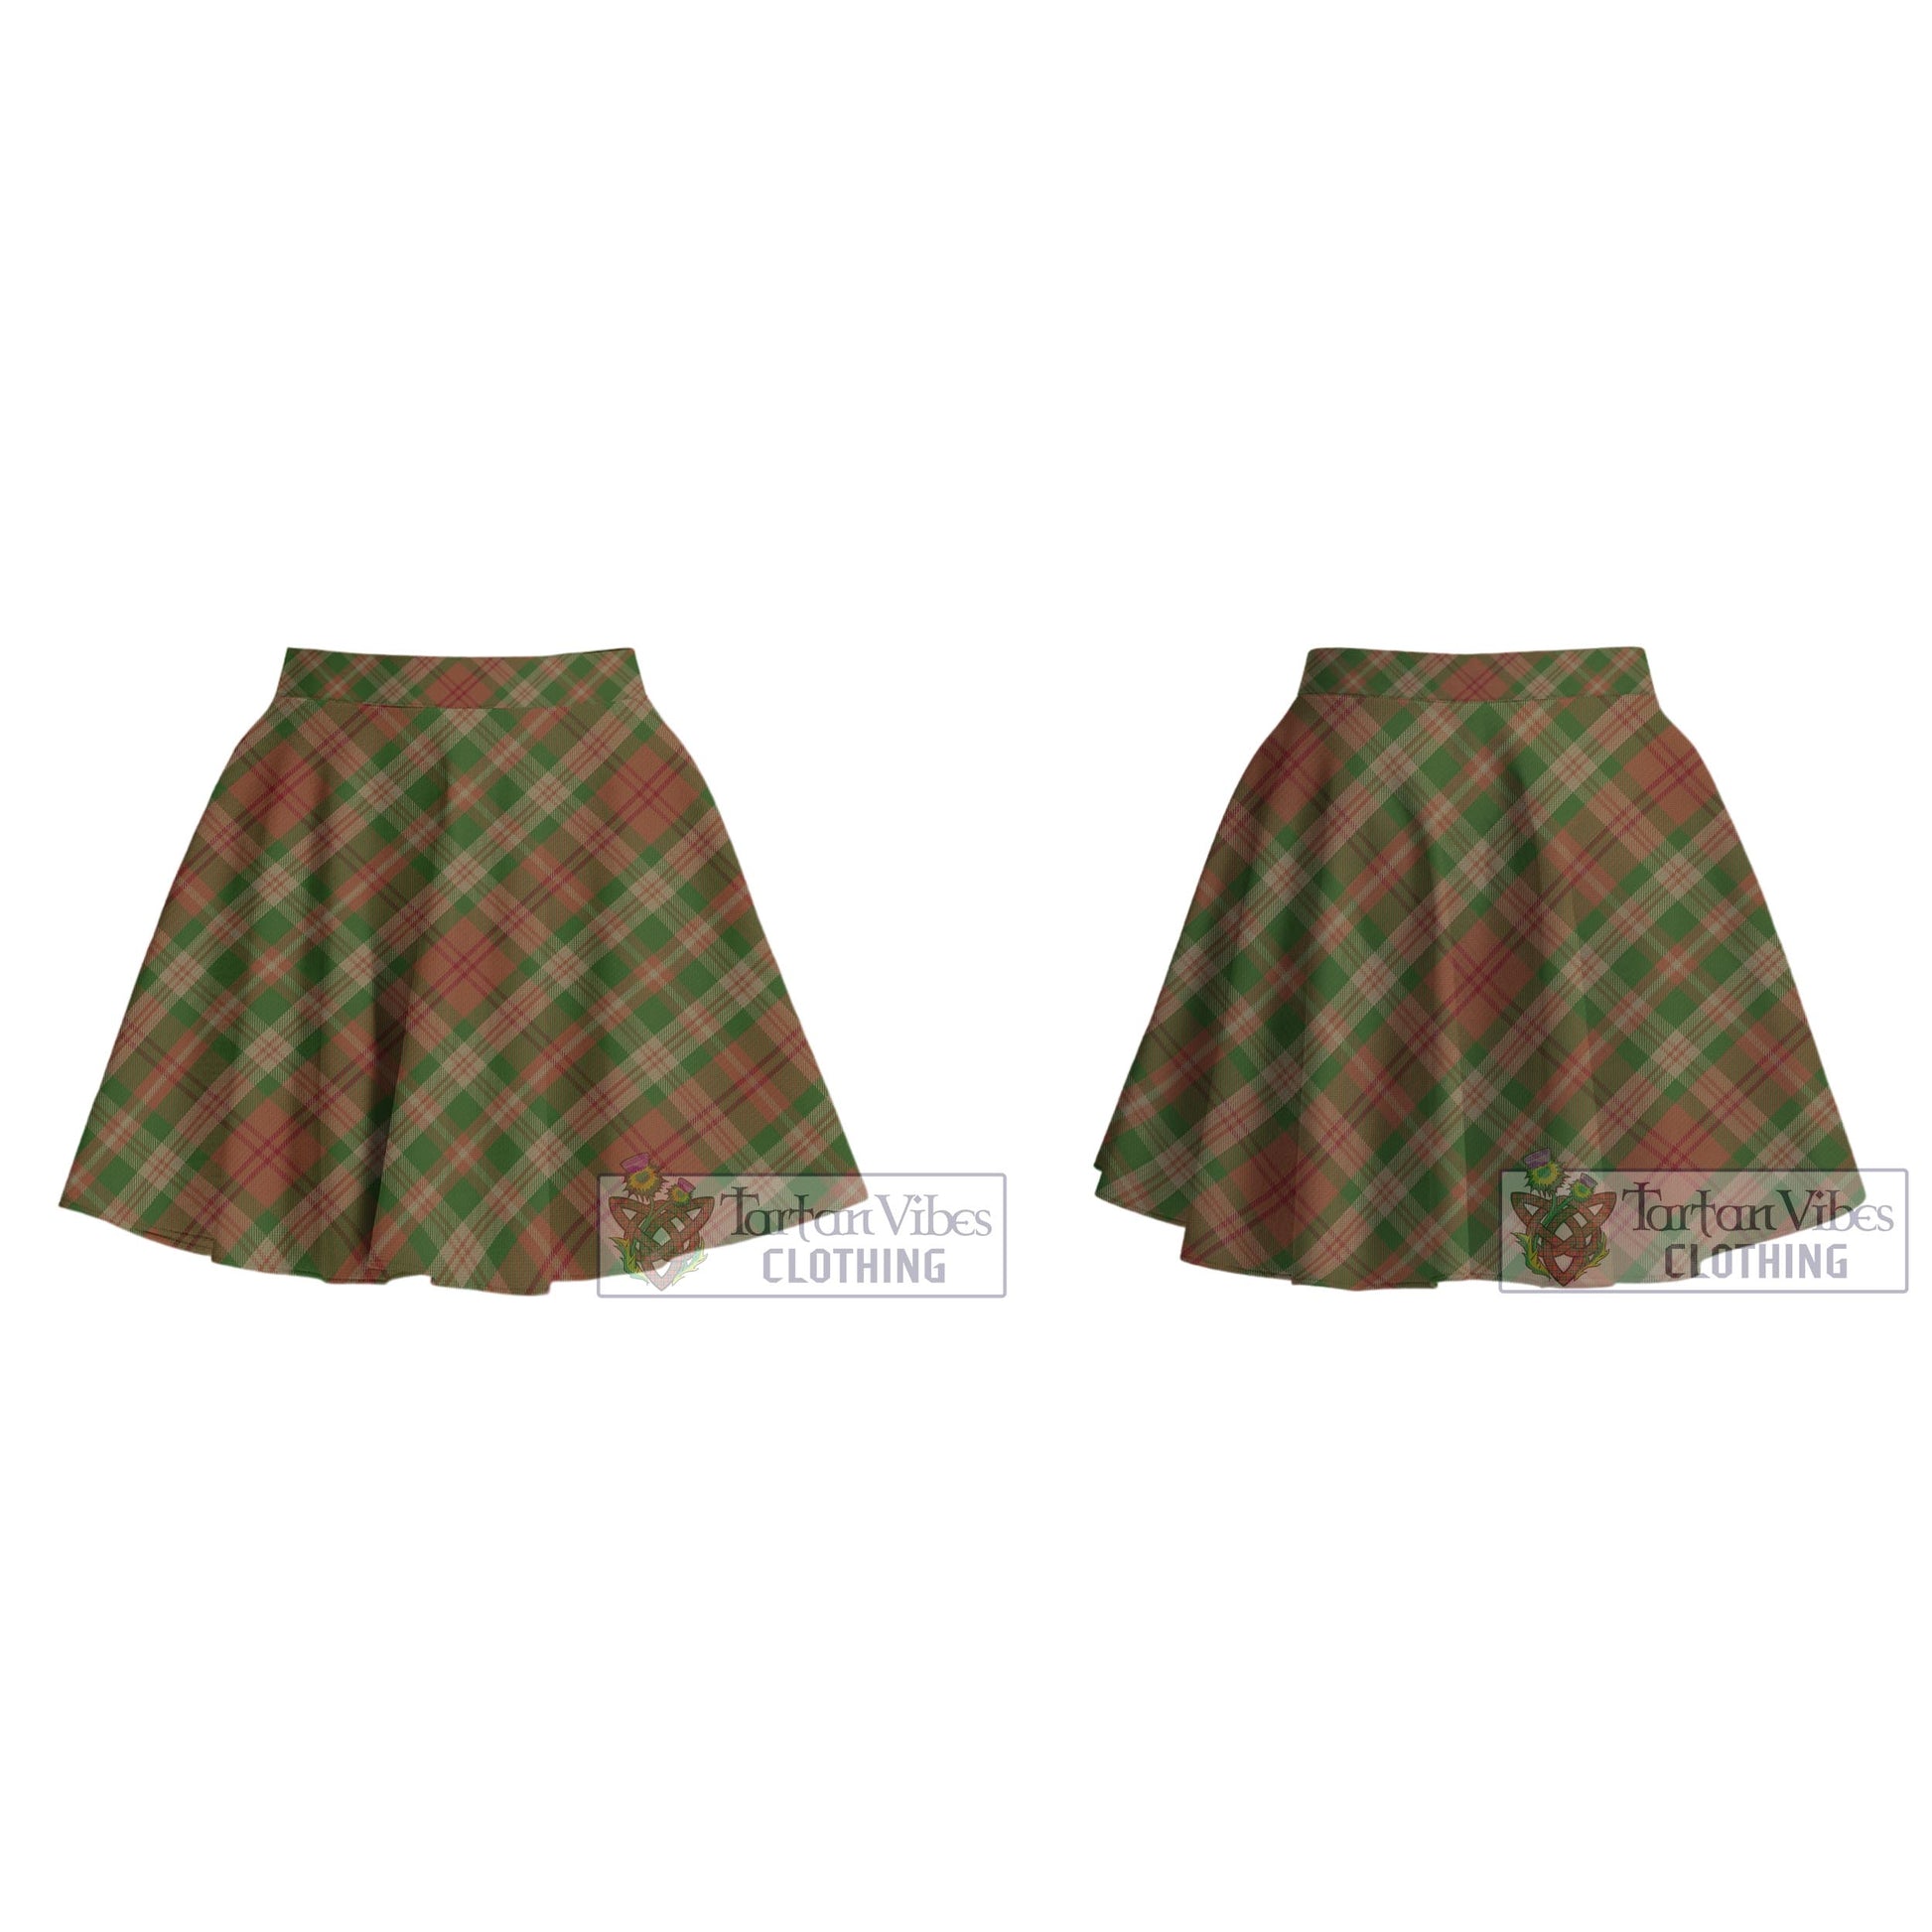 Tartan Vibes Clothing Pierce Tartan Women's Plated Mini Skirt